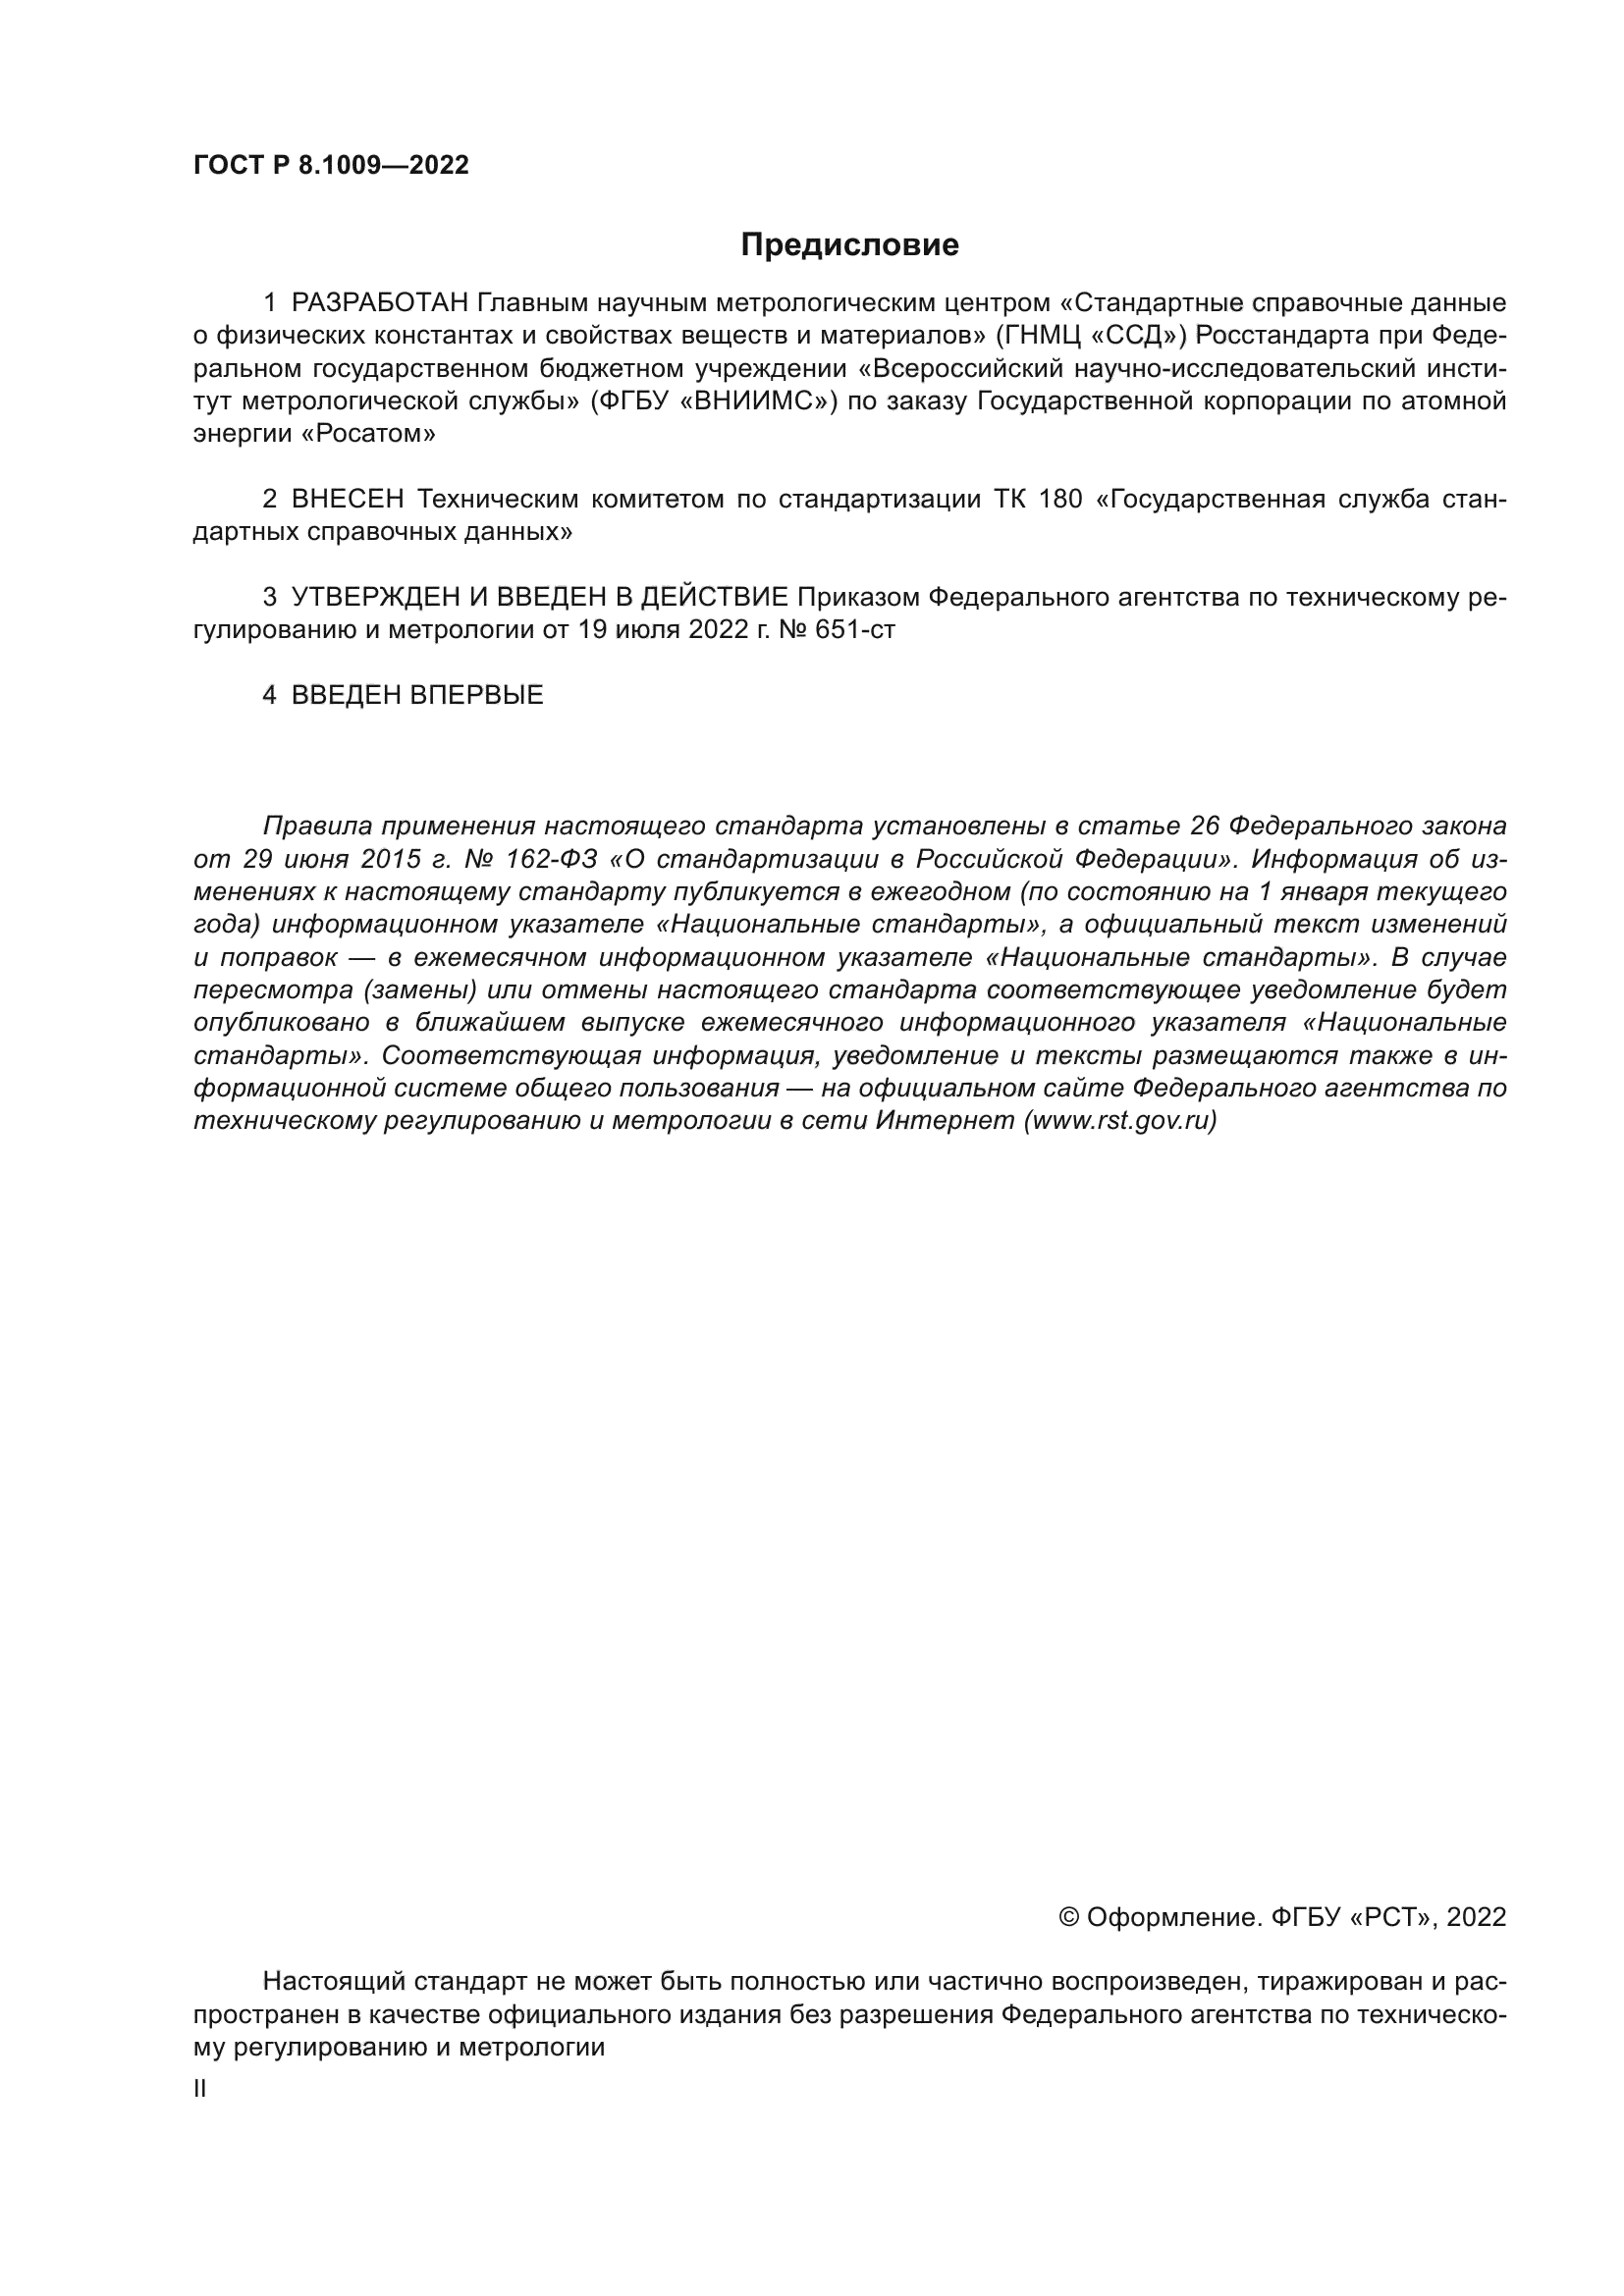 ГОСТ Р 8.1009-2022